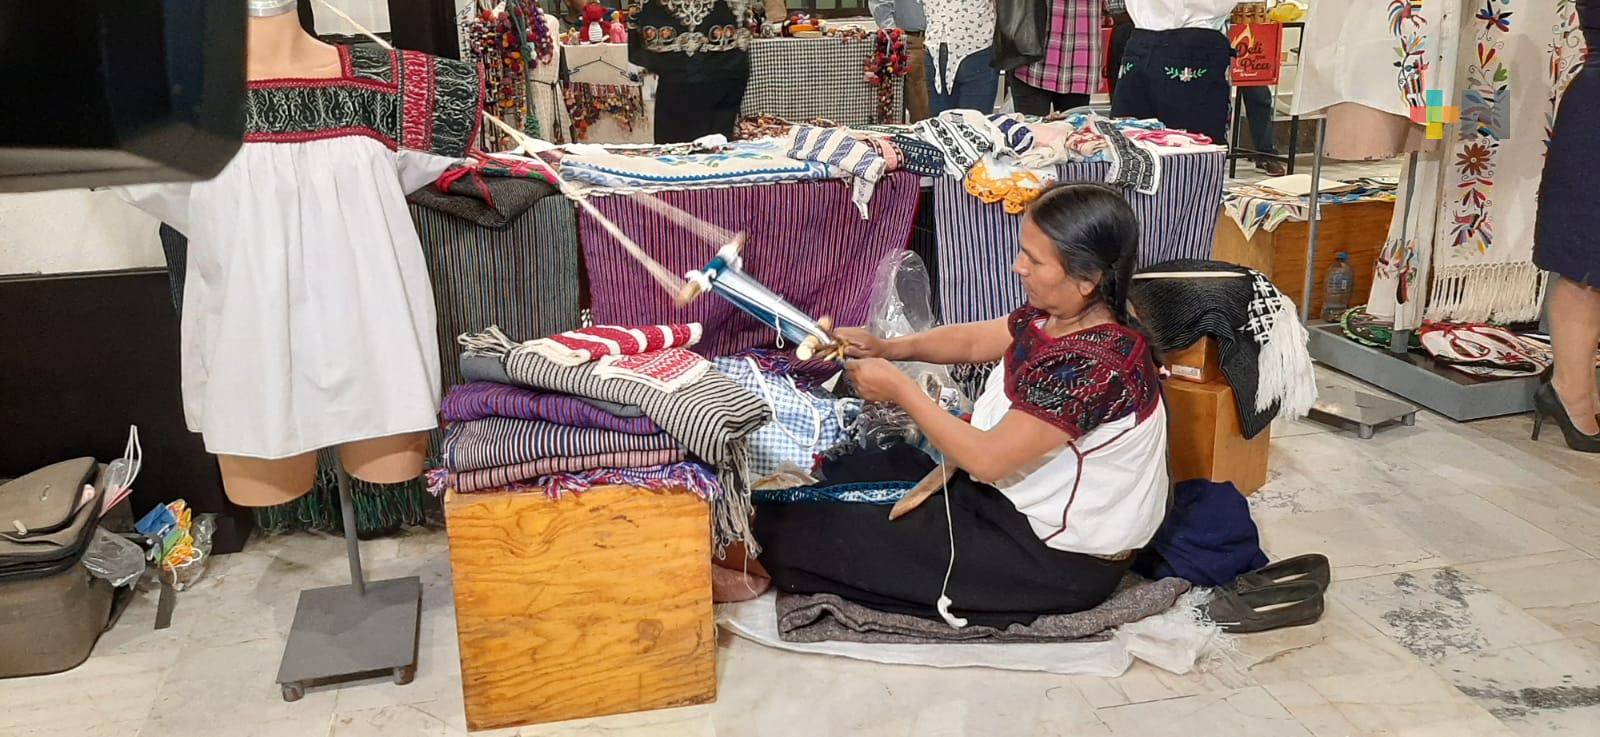 Participan 20 artesanos de Veracruz e Hidalgo en mercado de artesanías